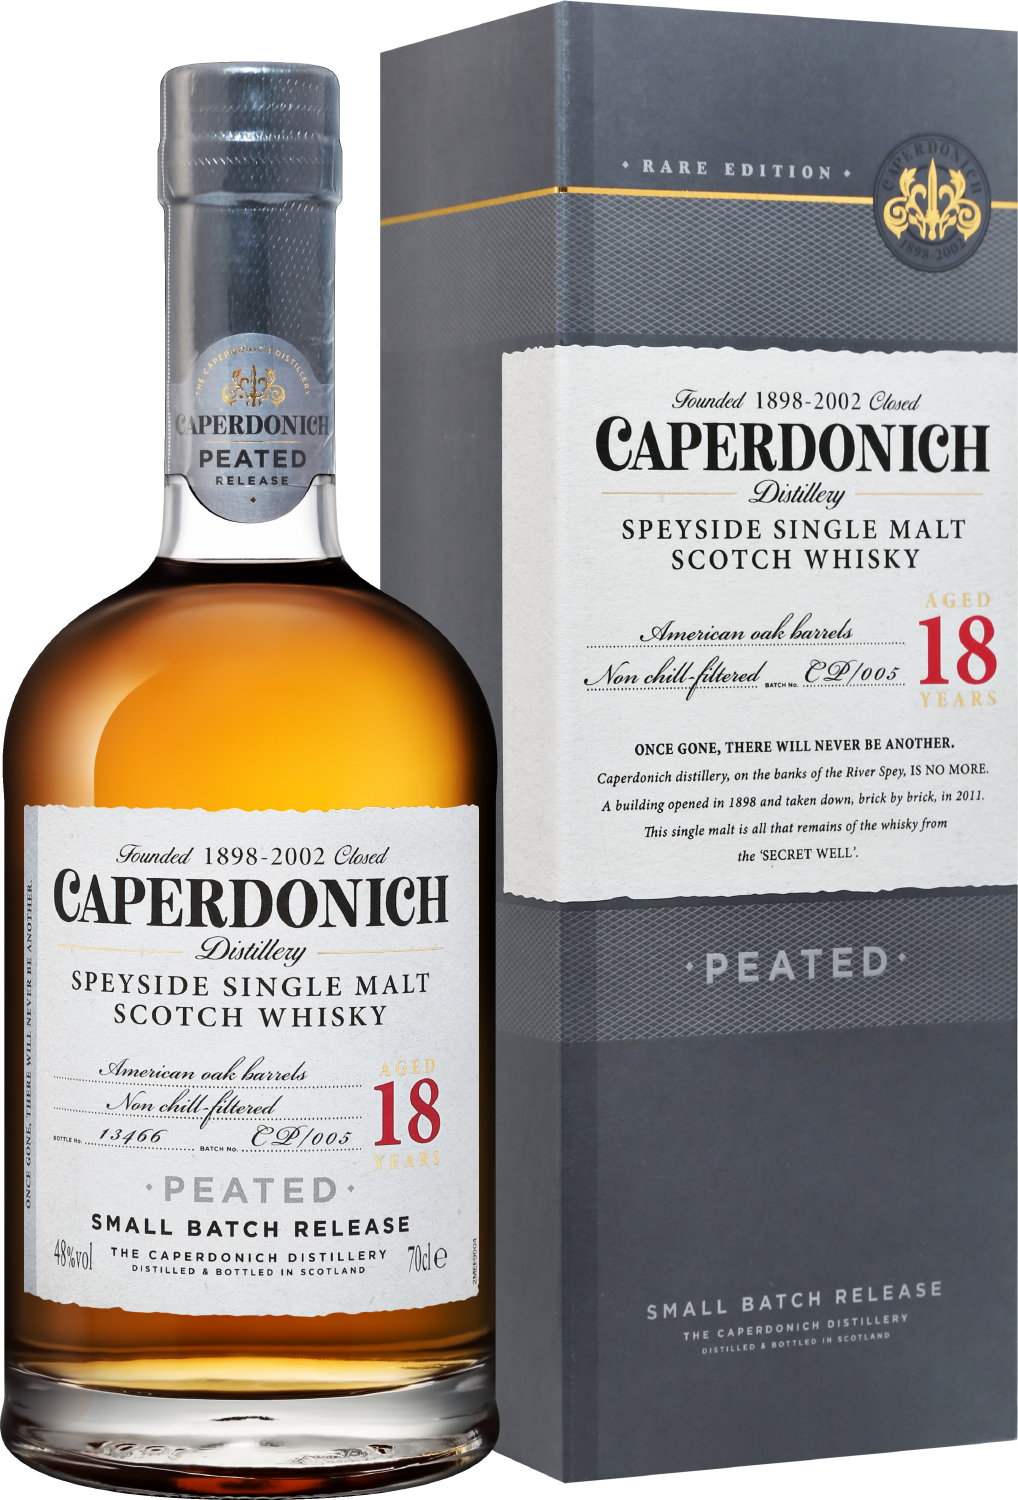 hinch peated single malt irish whisky Caperdonich Speyside Peated Single Malt Scotch Whisky 18 y.o. (gift box)